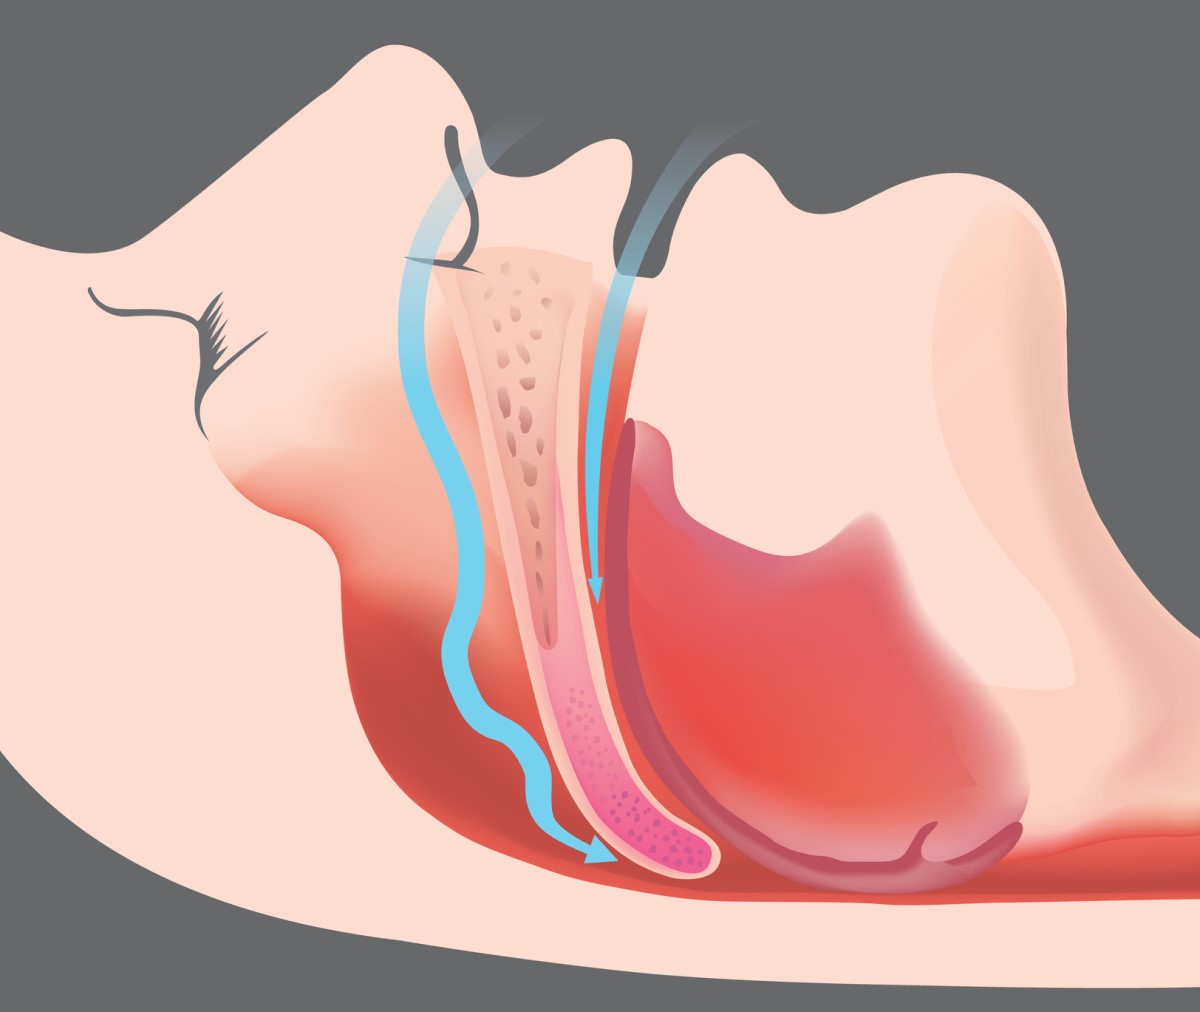 Obštrukčné apnoe a prekážka v dýchacích cestách - animovaný obrázok a model dýchacích ciest